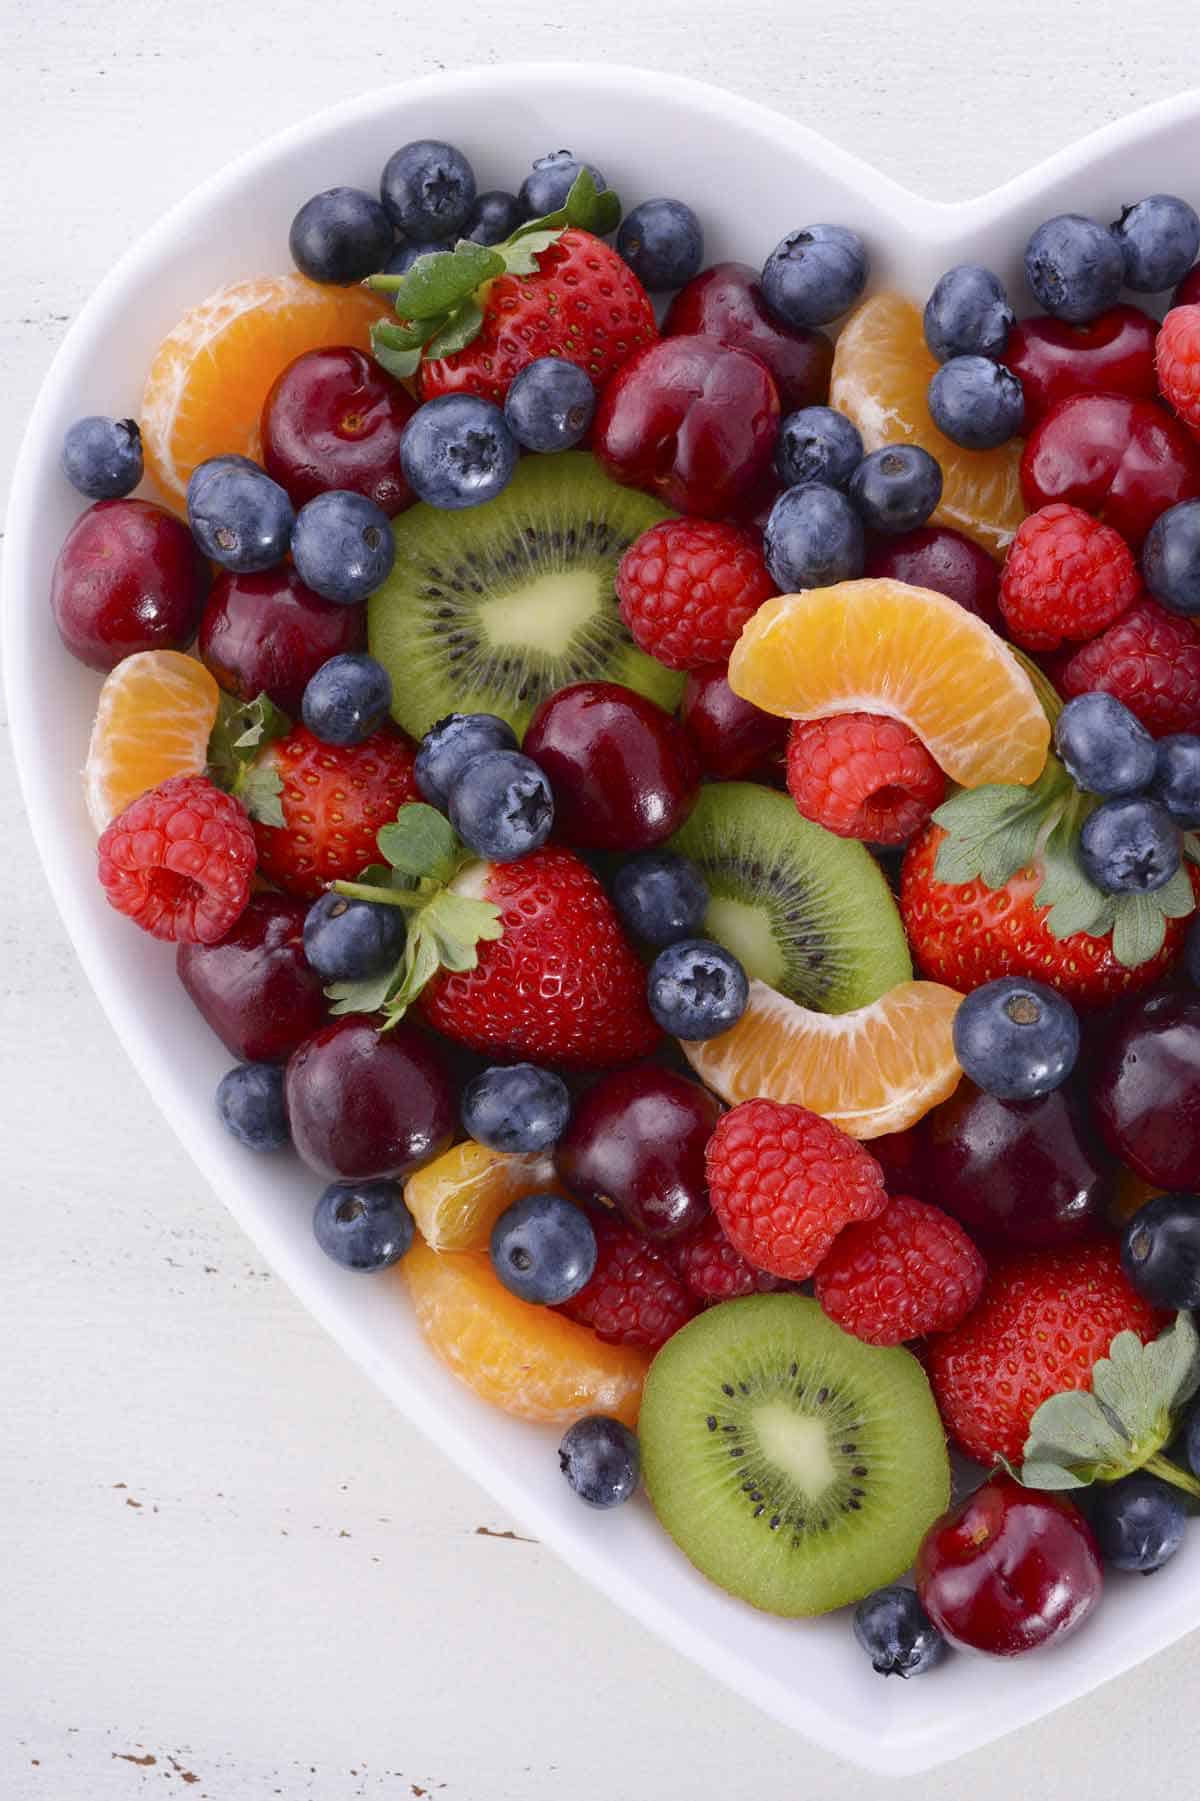 Heart shaped bowl filled with fruit salad. Salad has strawberries, kiwi, raspberries, blueberries, cherries, and orange wedges.